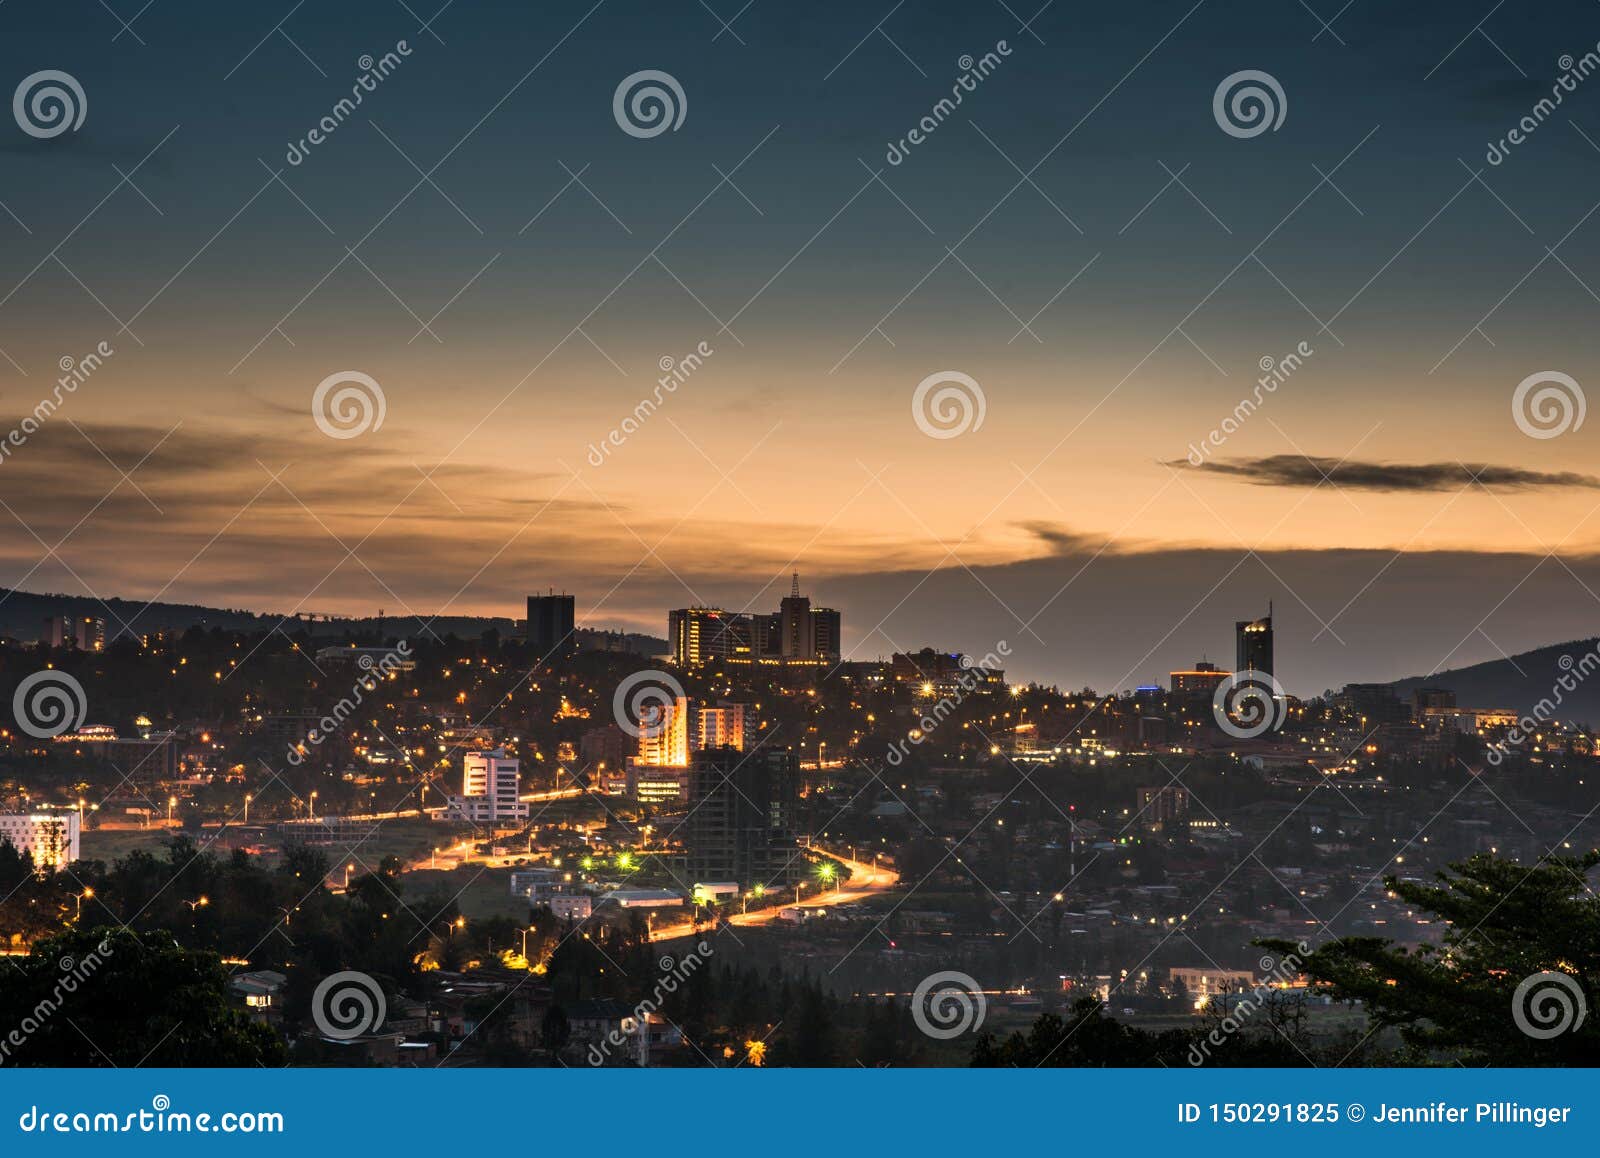 kigali city centre skyline and surrounding areas lit up at dusk. rwanda